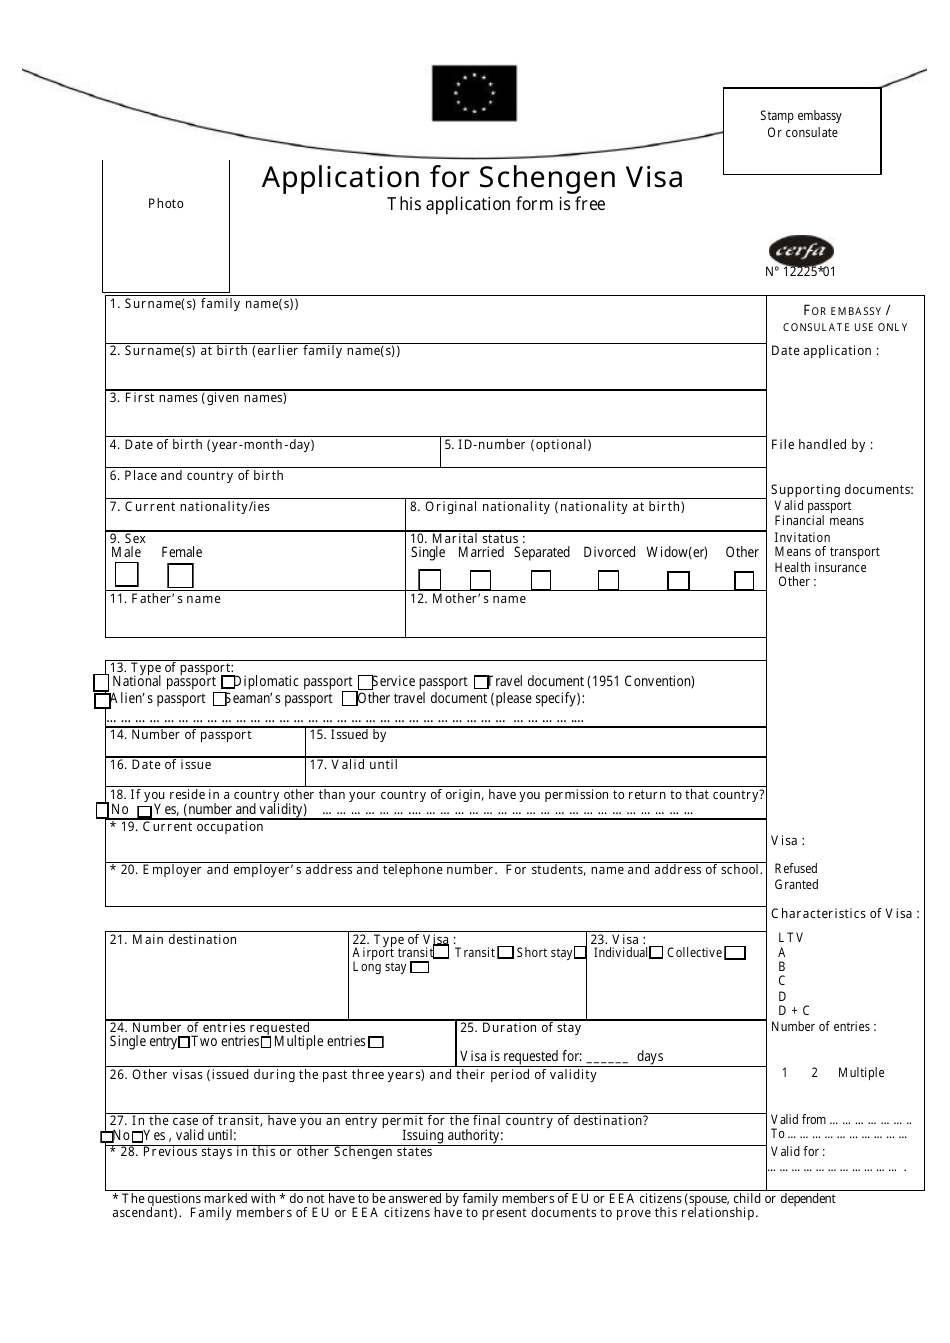 Application Form for Schengen Visa - European Union, Page 1